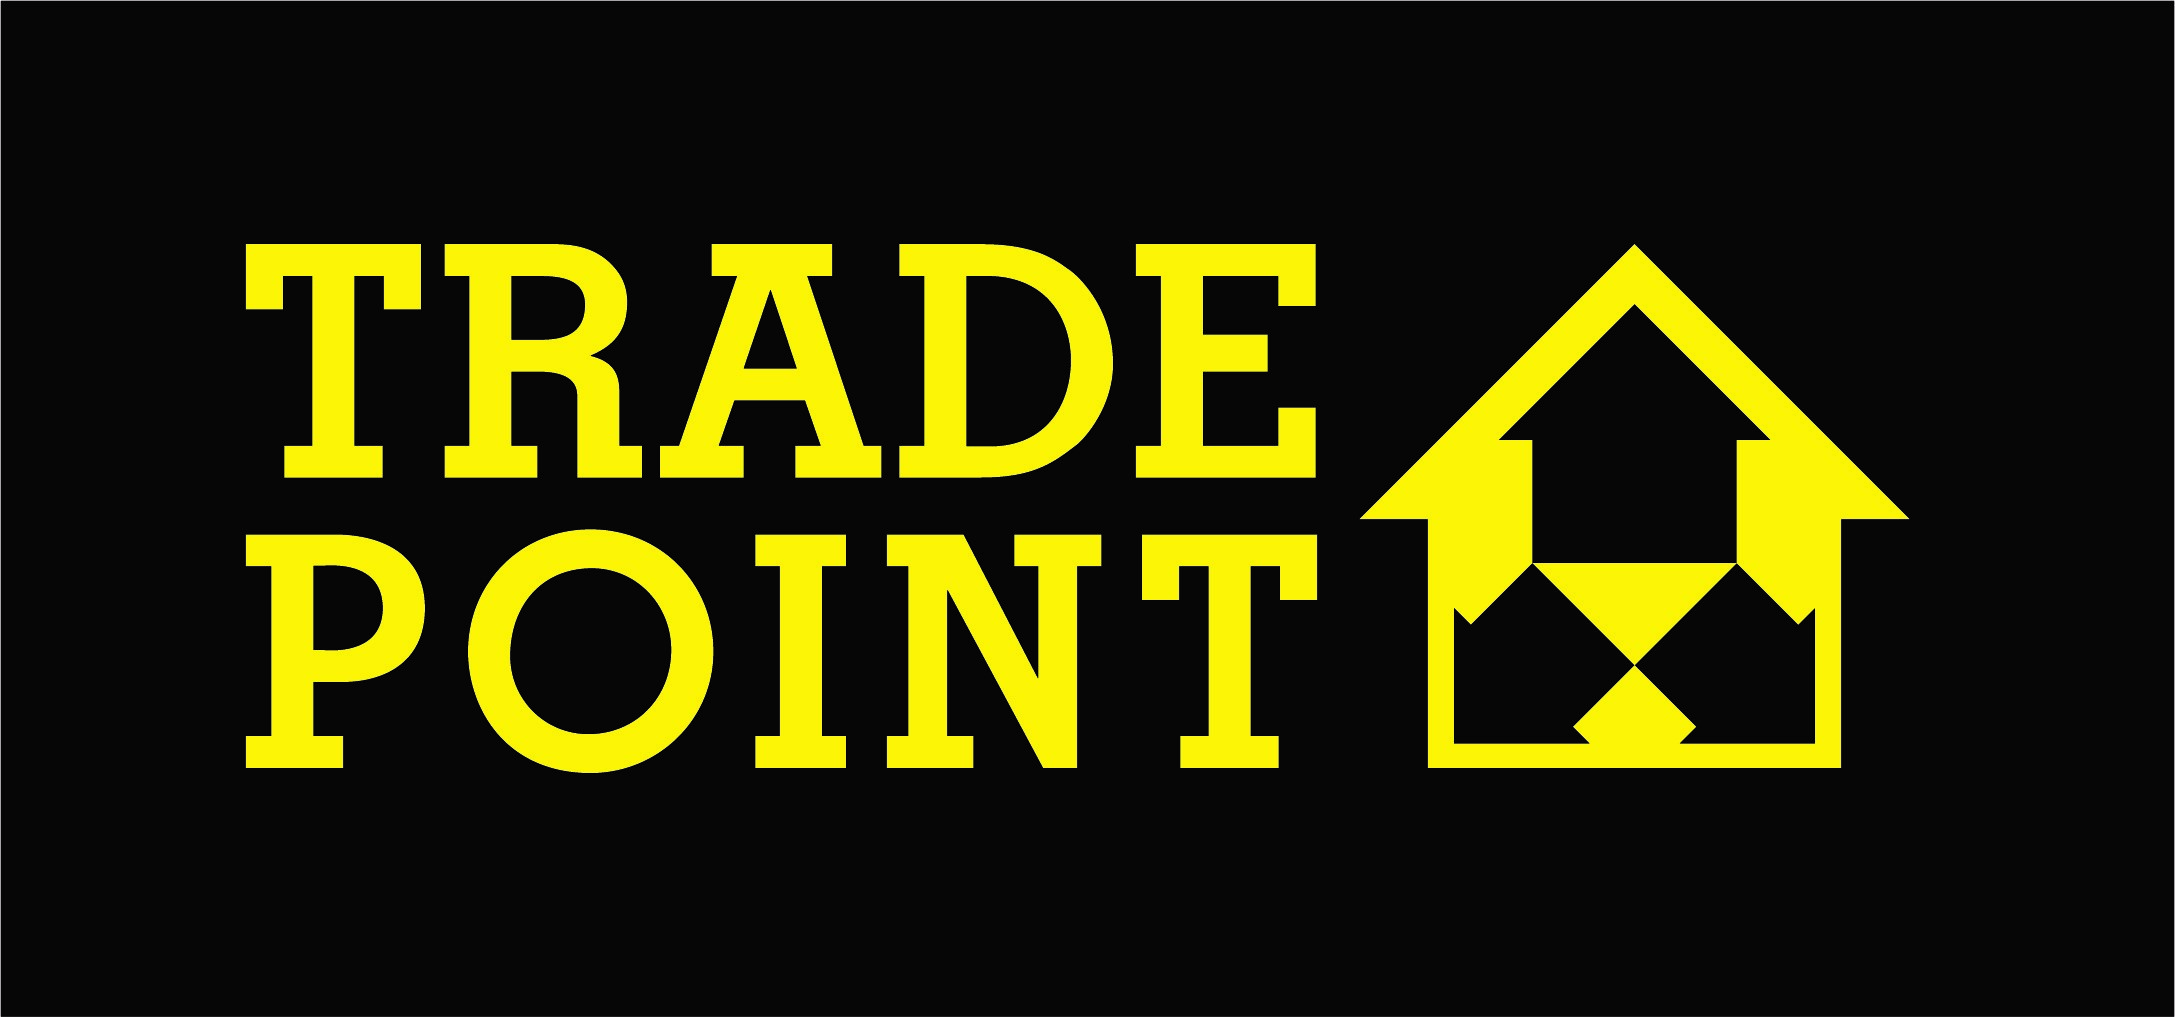 Tradepoint logo.jpg 3